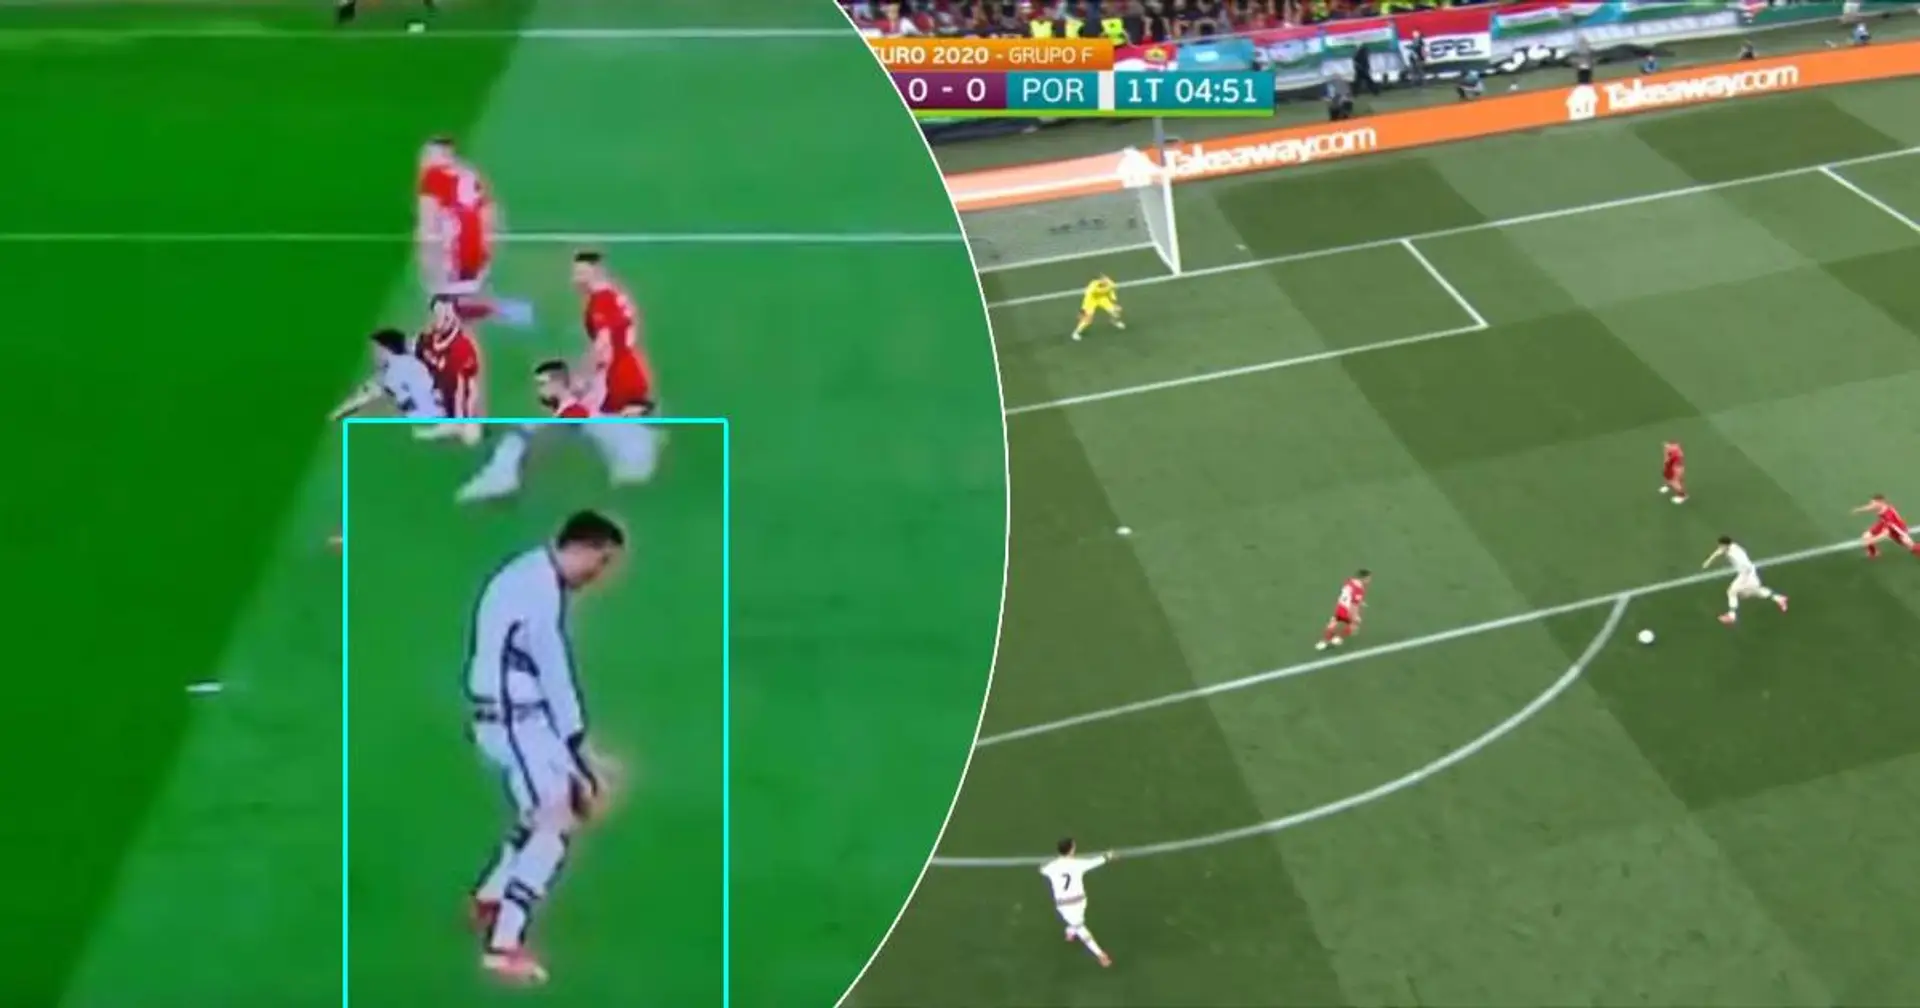 Jota annoys Cristiano Ronaldo as he refuses to pass the ball – caught on camera